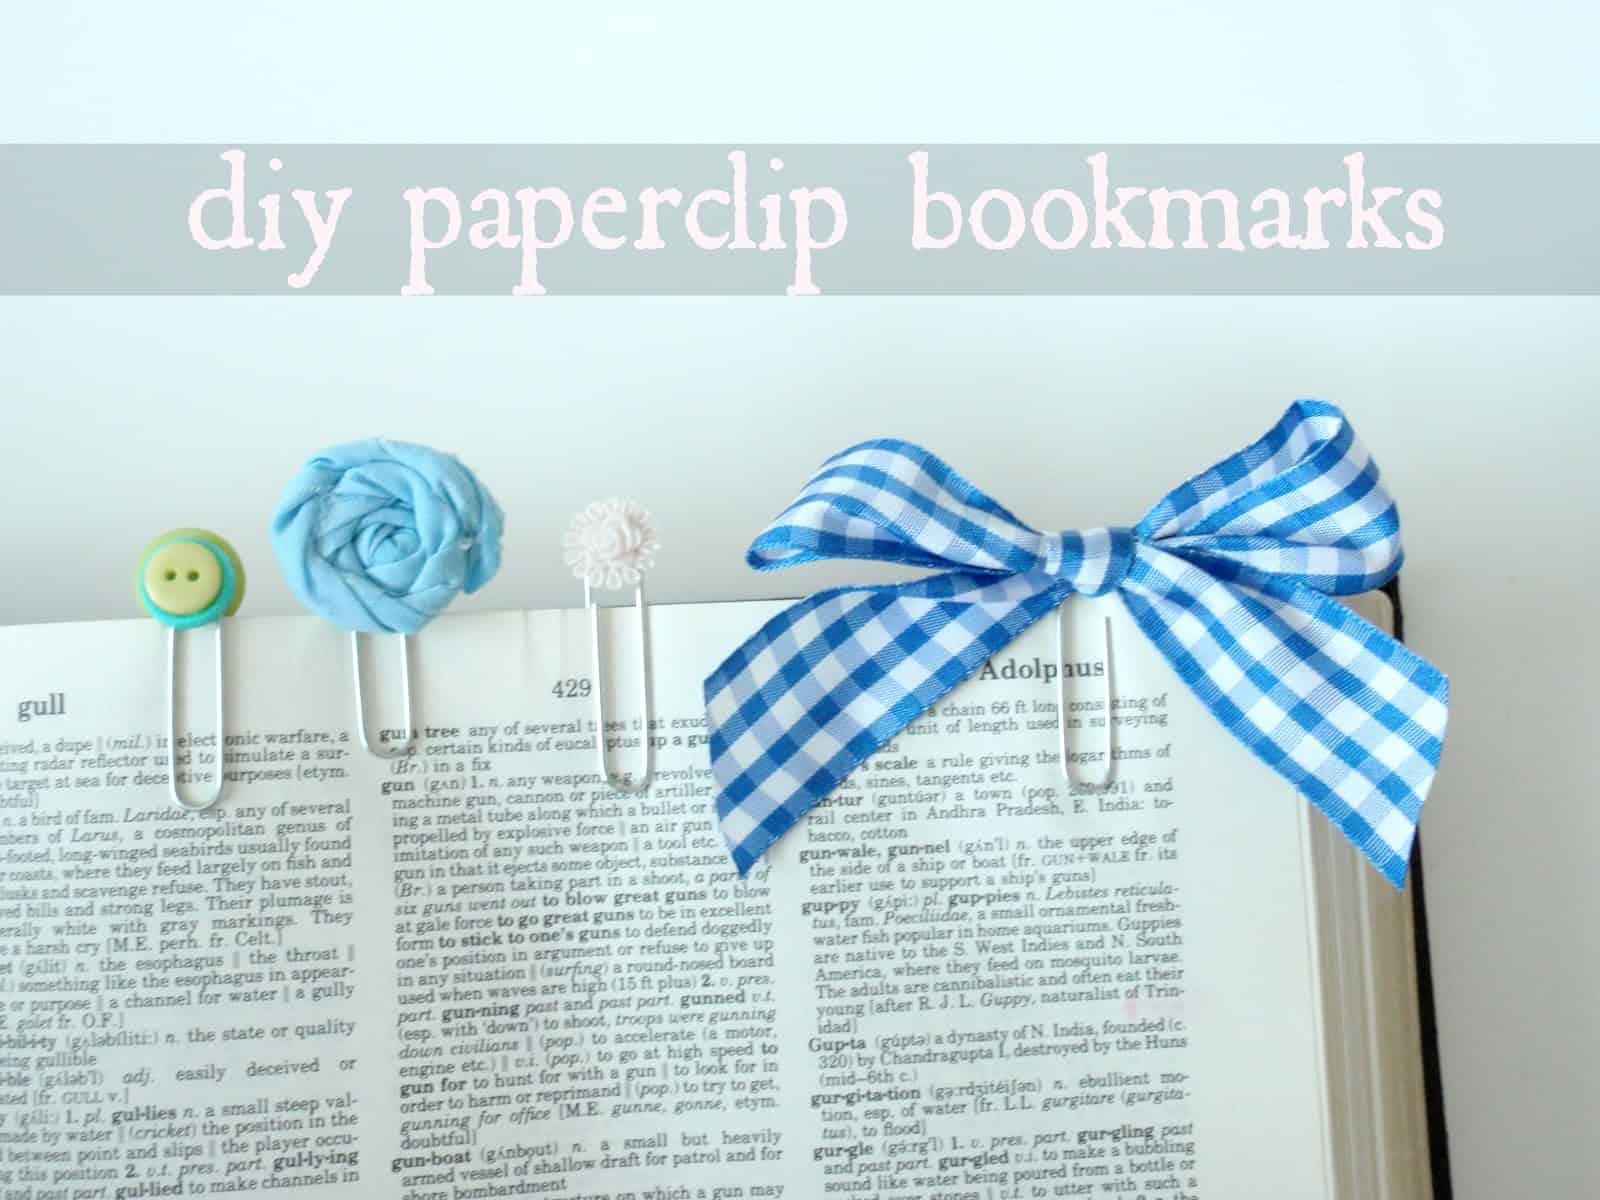 Diy paperclip bookmarks